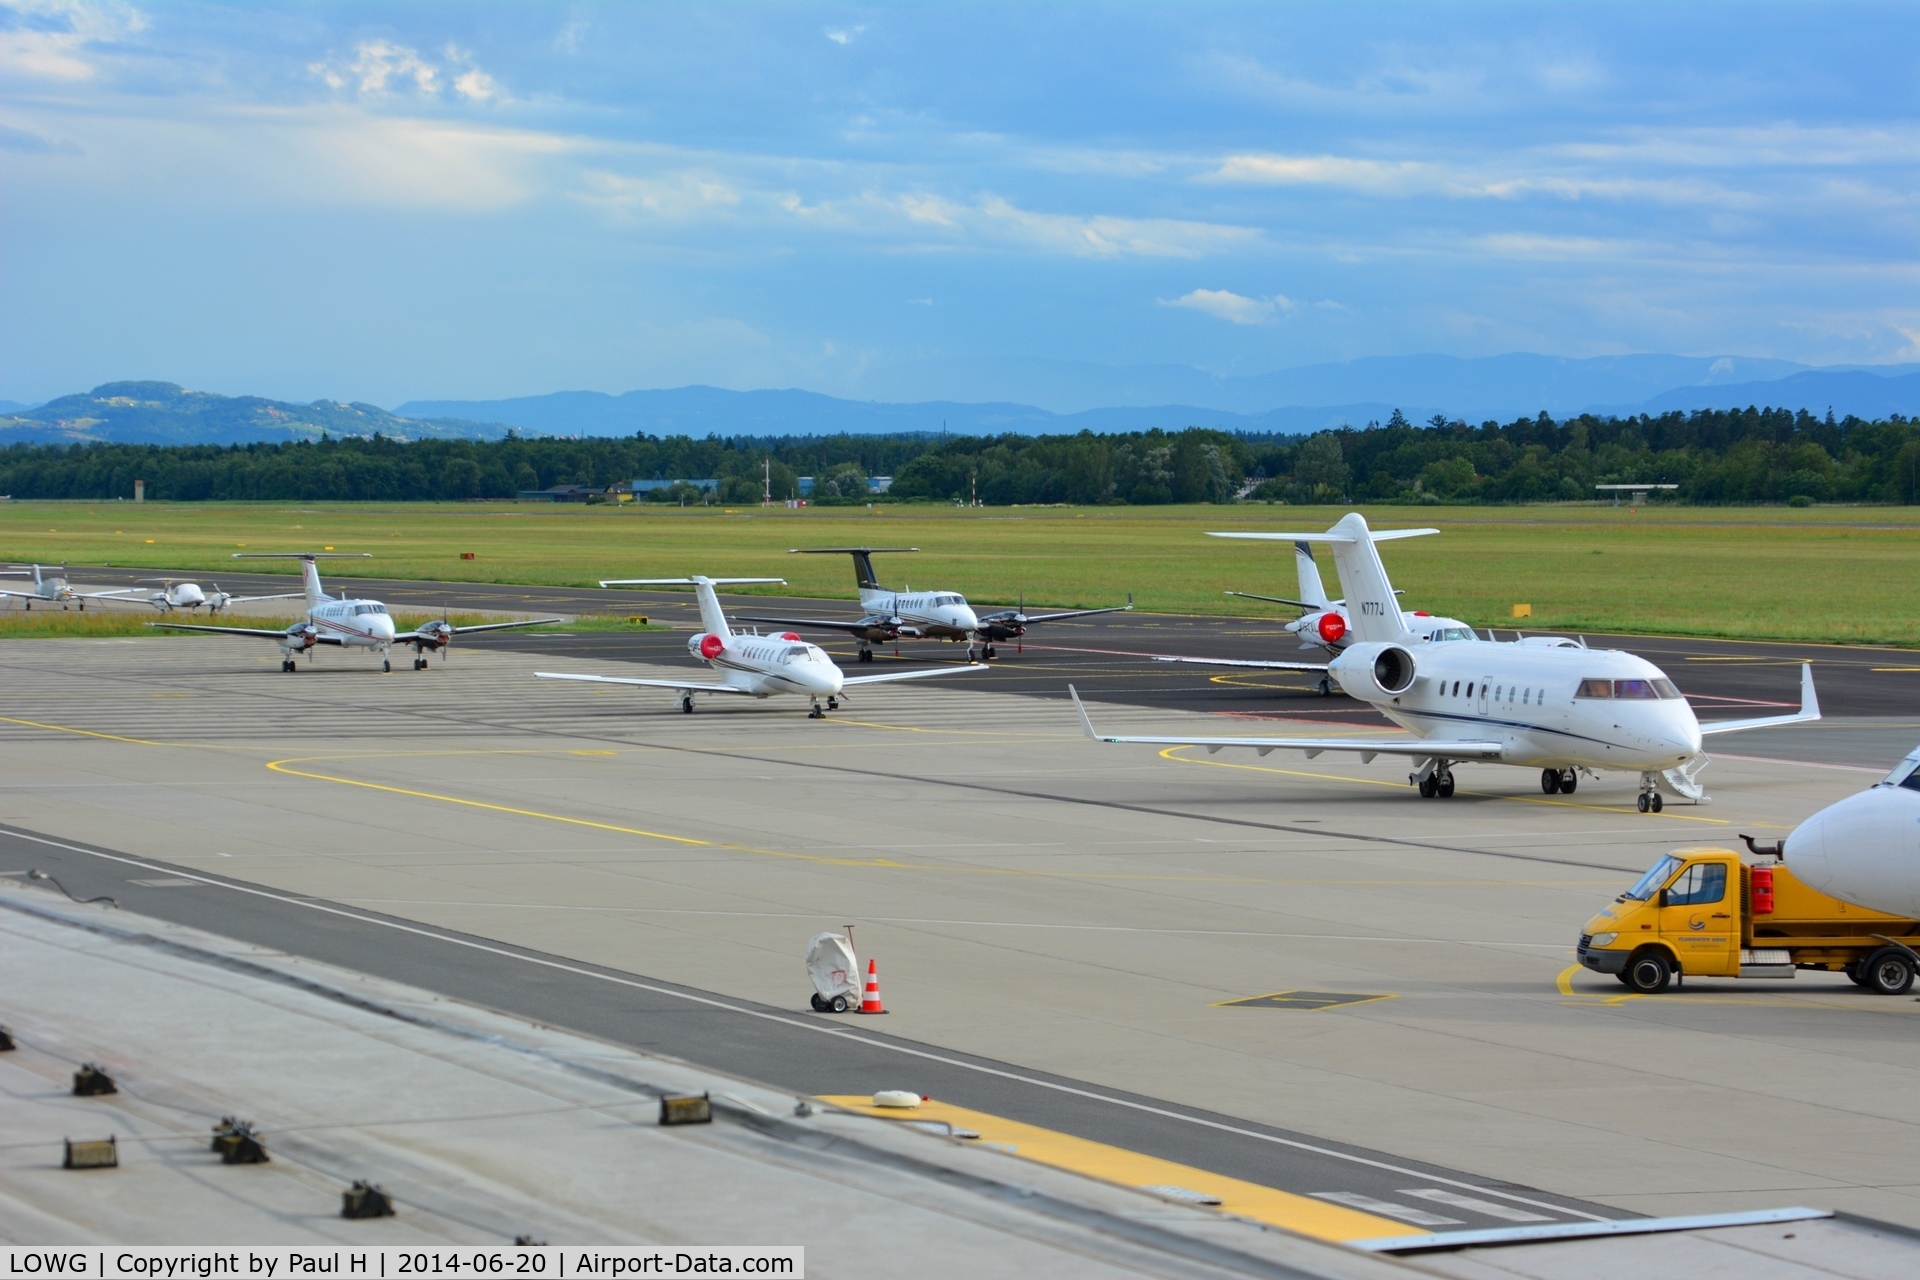 Graz Airport, Graz Austria (LOWG) - Formula1, bussines charter